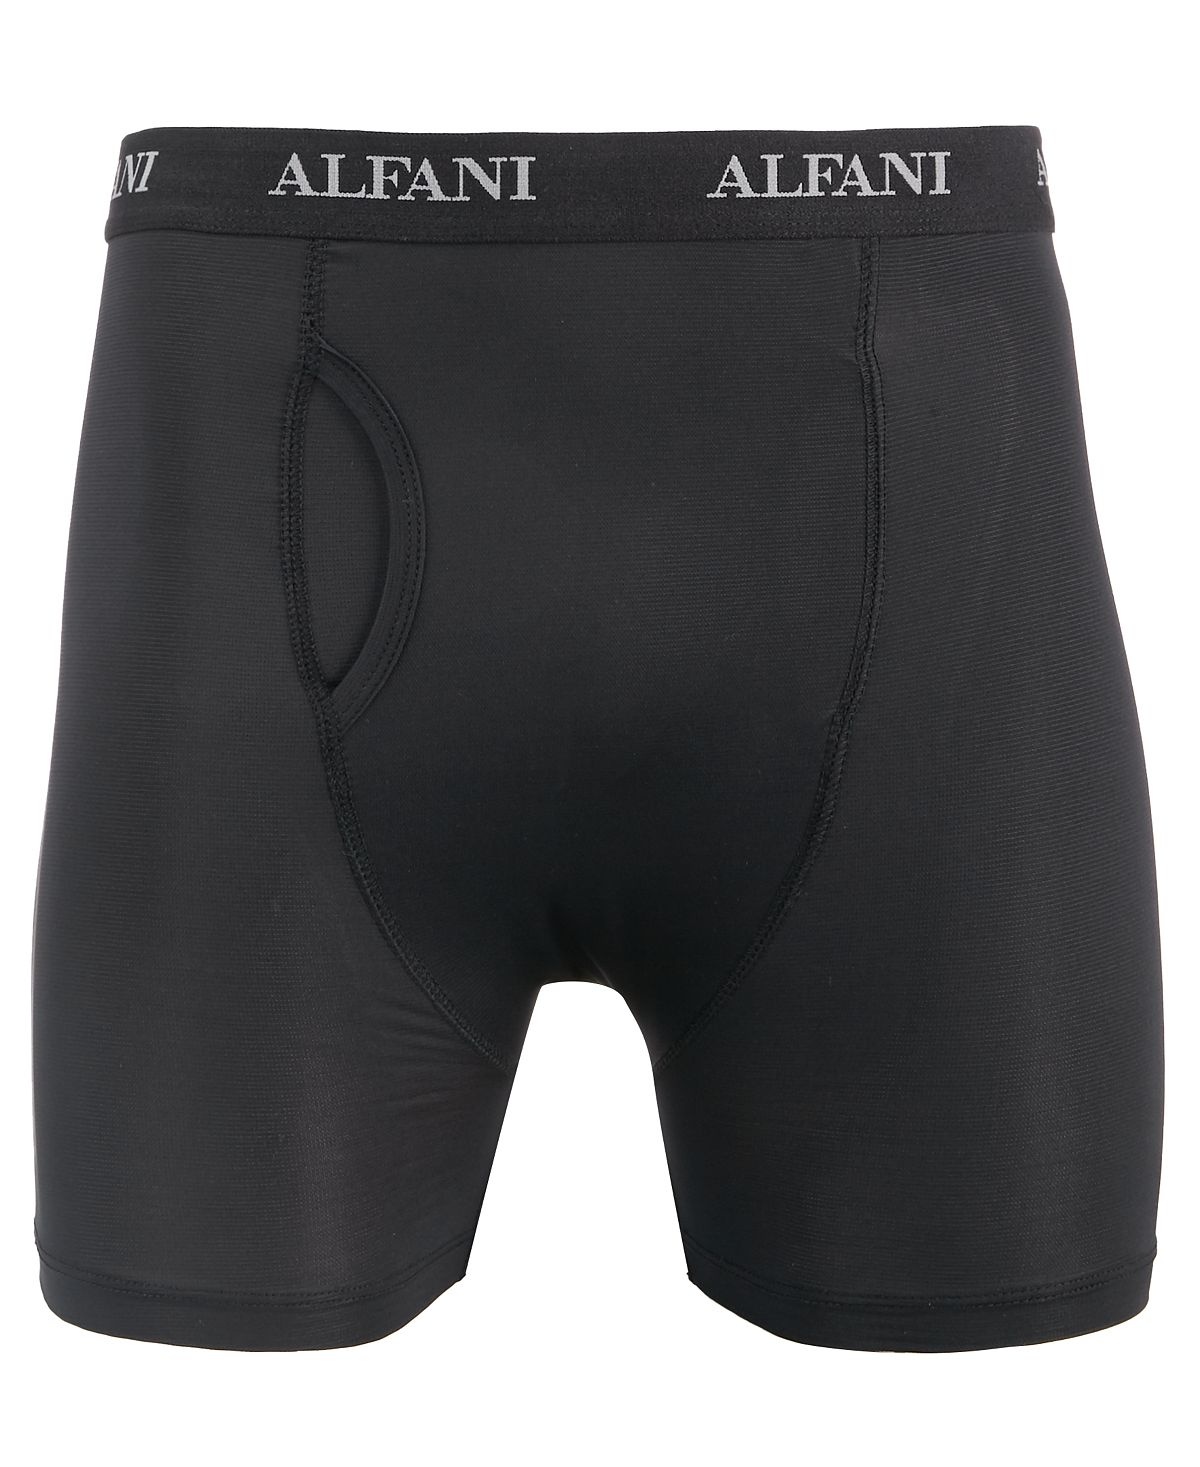 Alfani Air Mesh Quick-dry Moisture-wicking Boxer Briefs Black